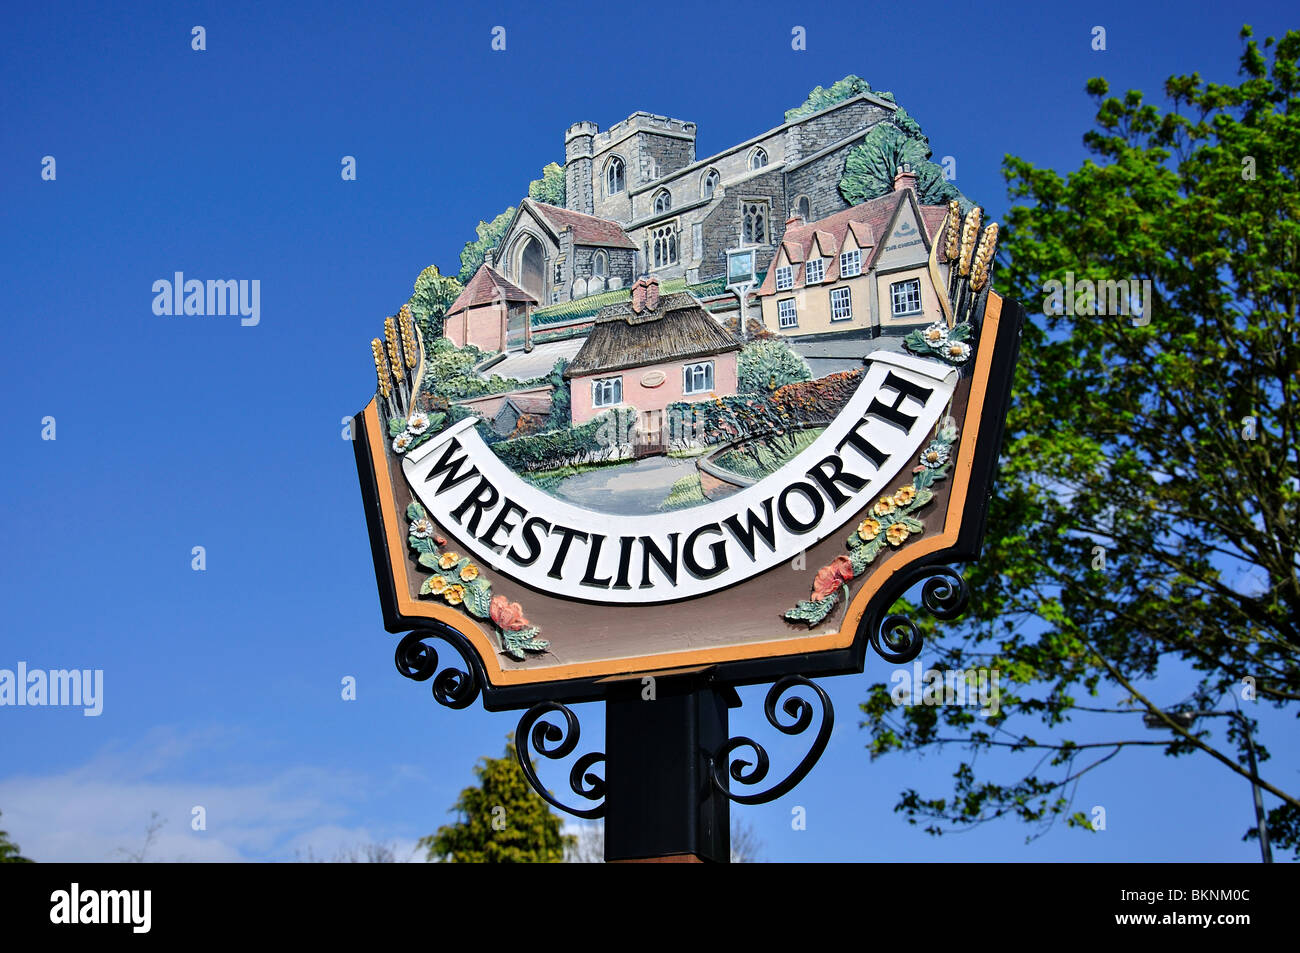 Village sign, Wrestlingworth, Bedfordshire, England, United Kingdom Stock Photo